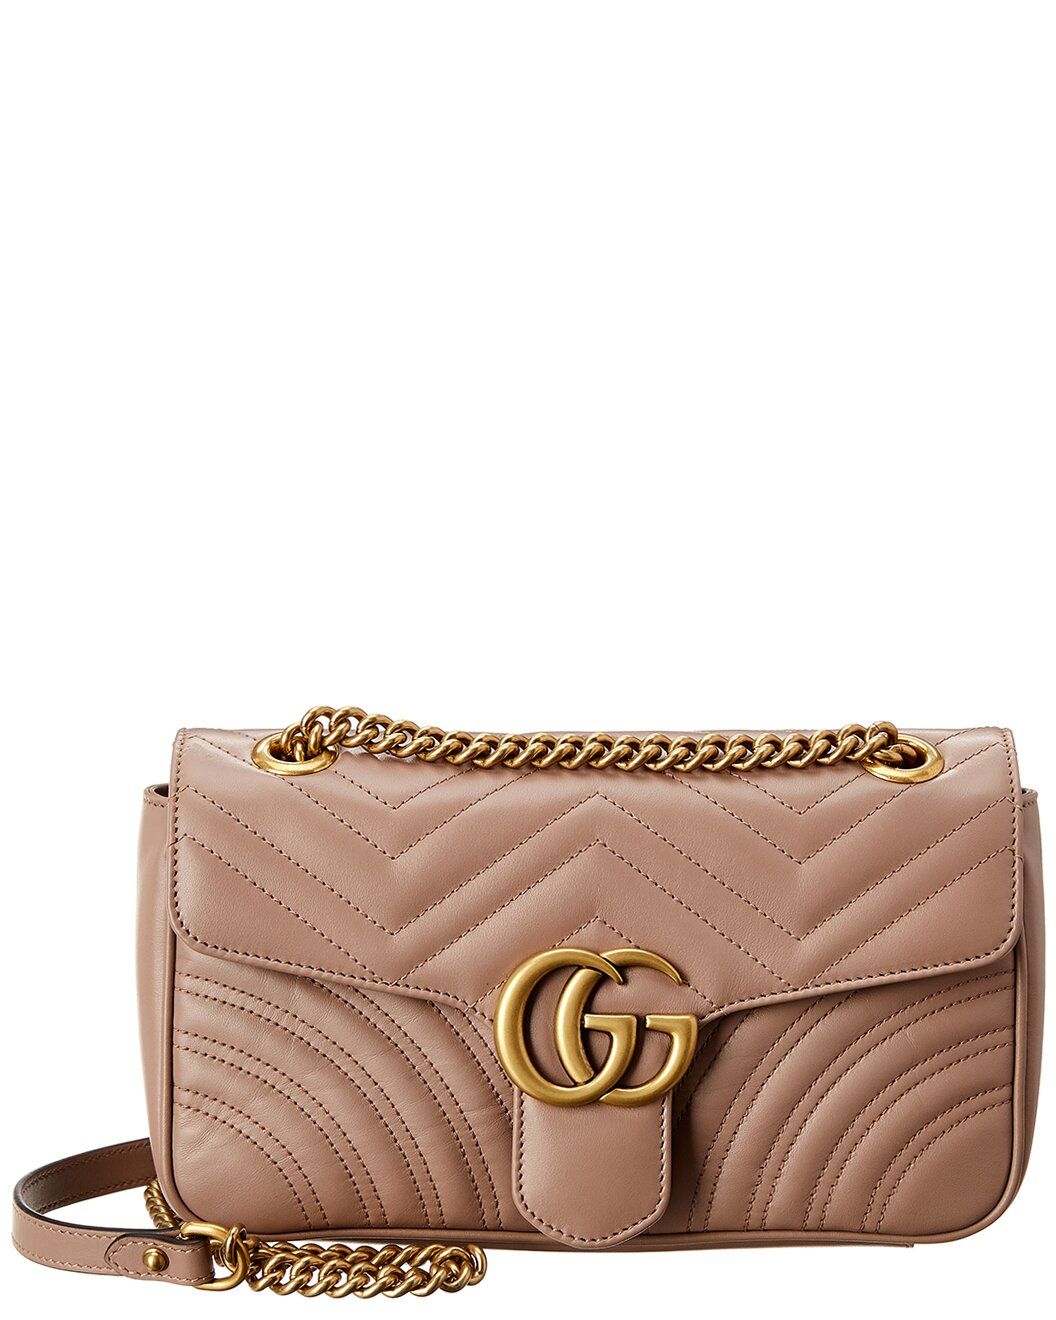 GG Marmont Small Matelasse Leather Shoulder Bag | Rue La La